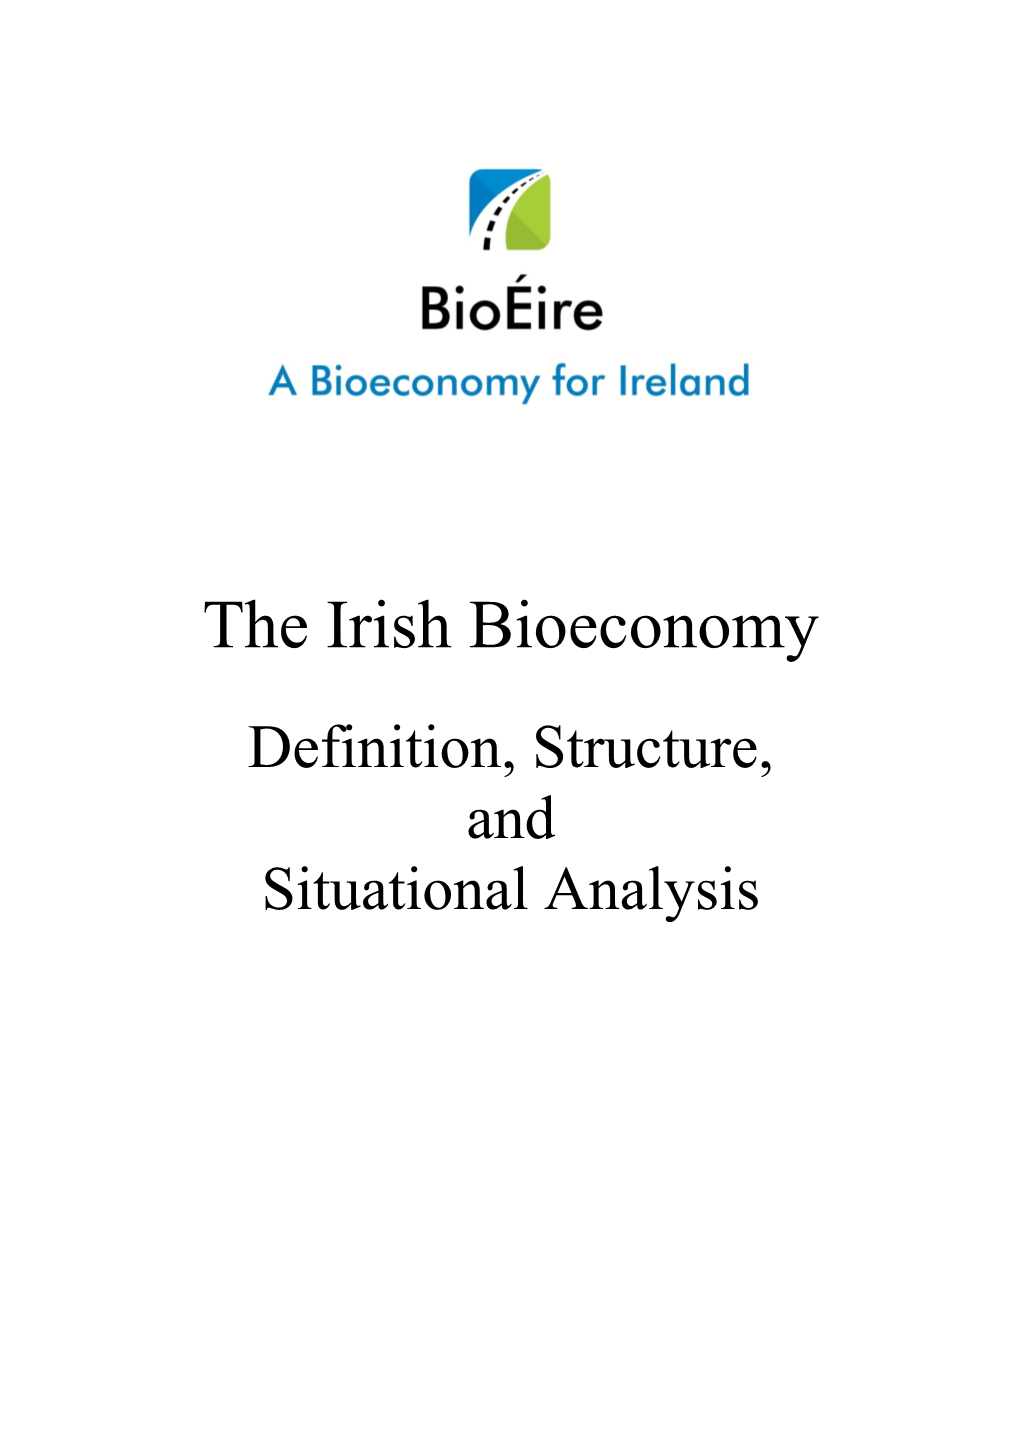 The Irish Bioeconomy Definition, Structure, and Situational Analysis the Irish Bioeconomy - Definition, Structure, and Situational Analysis